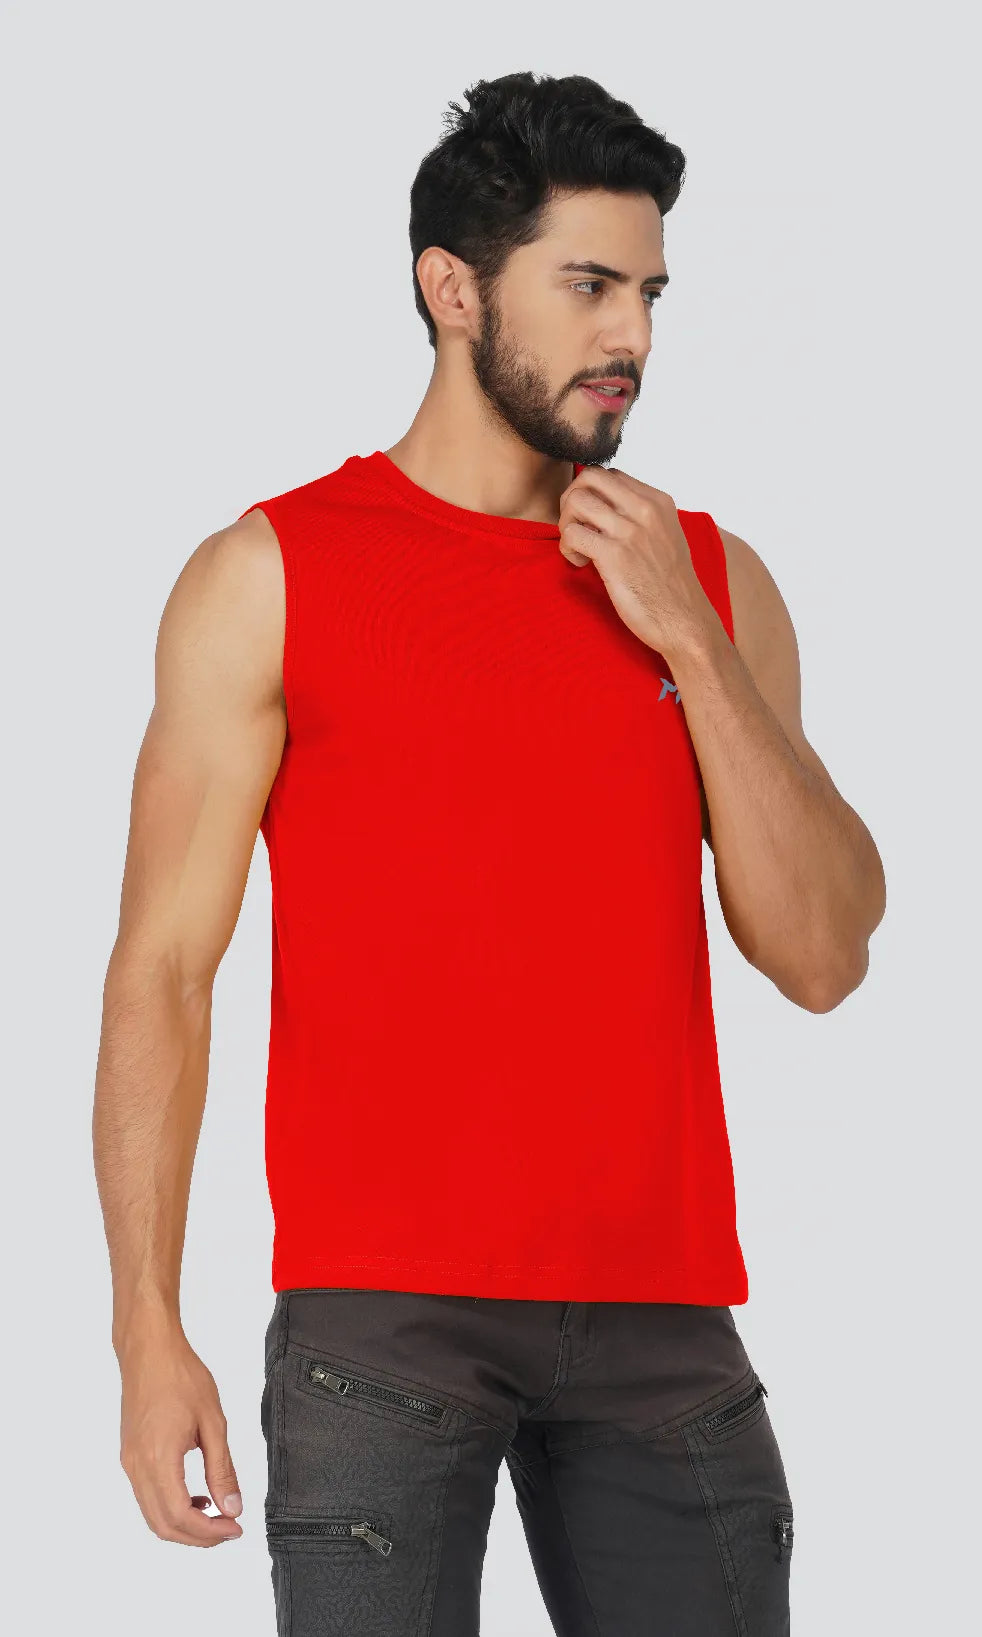 Mebadass Cotton Men's Sleeveless Regular Size Vests - Red